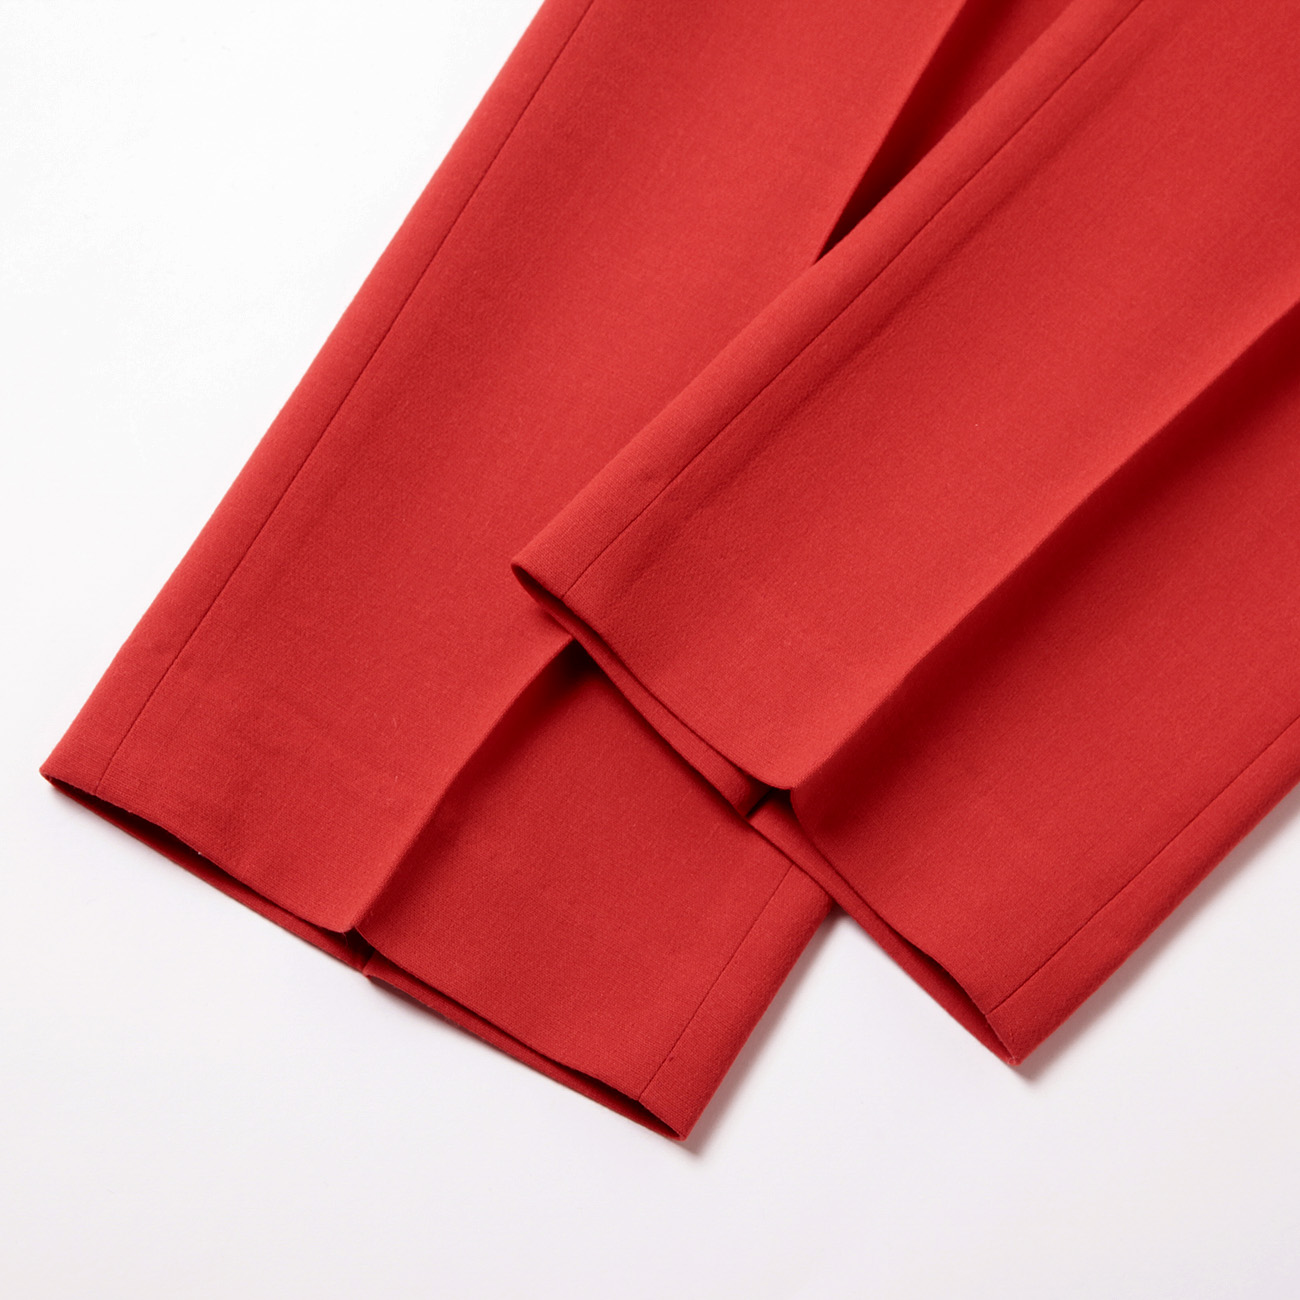 TENSE WOOL DOUBLE CLOTH SLACKS (レディース) - Red Orange